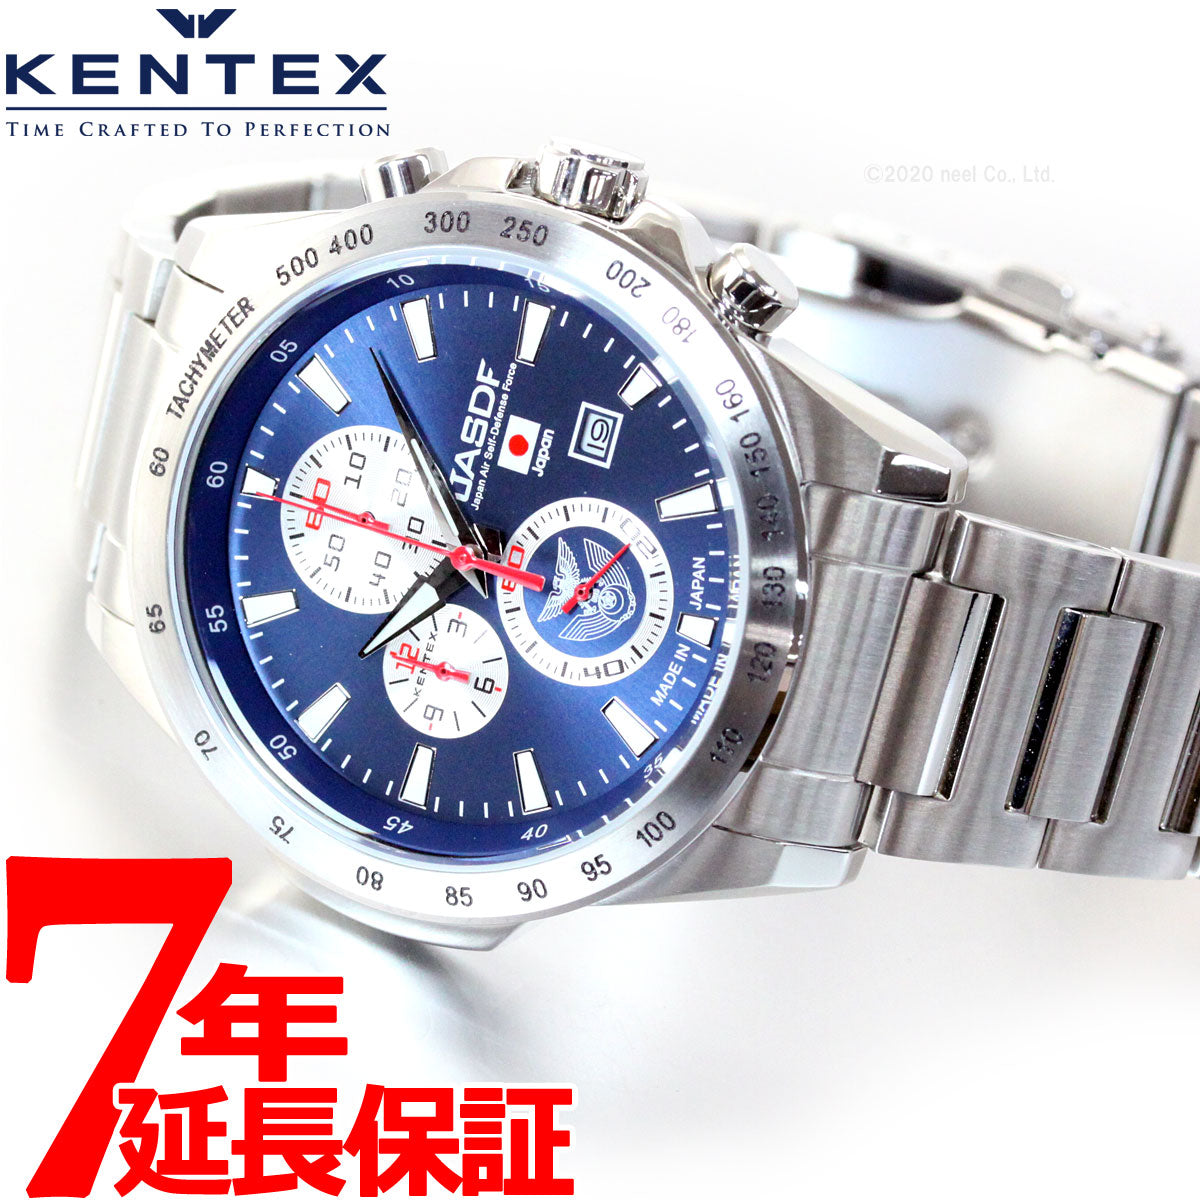 KENTEX ケンテックス 腕時計 メンズ JASDF PRO 自衛隊モデル 航空自衛隊 クロノグラフ S648M-01【正規品】【送料無料】